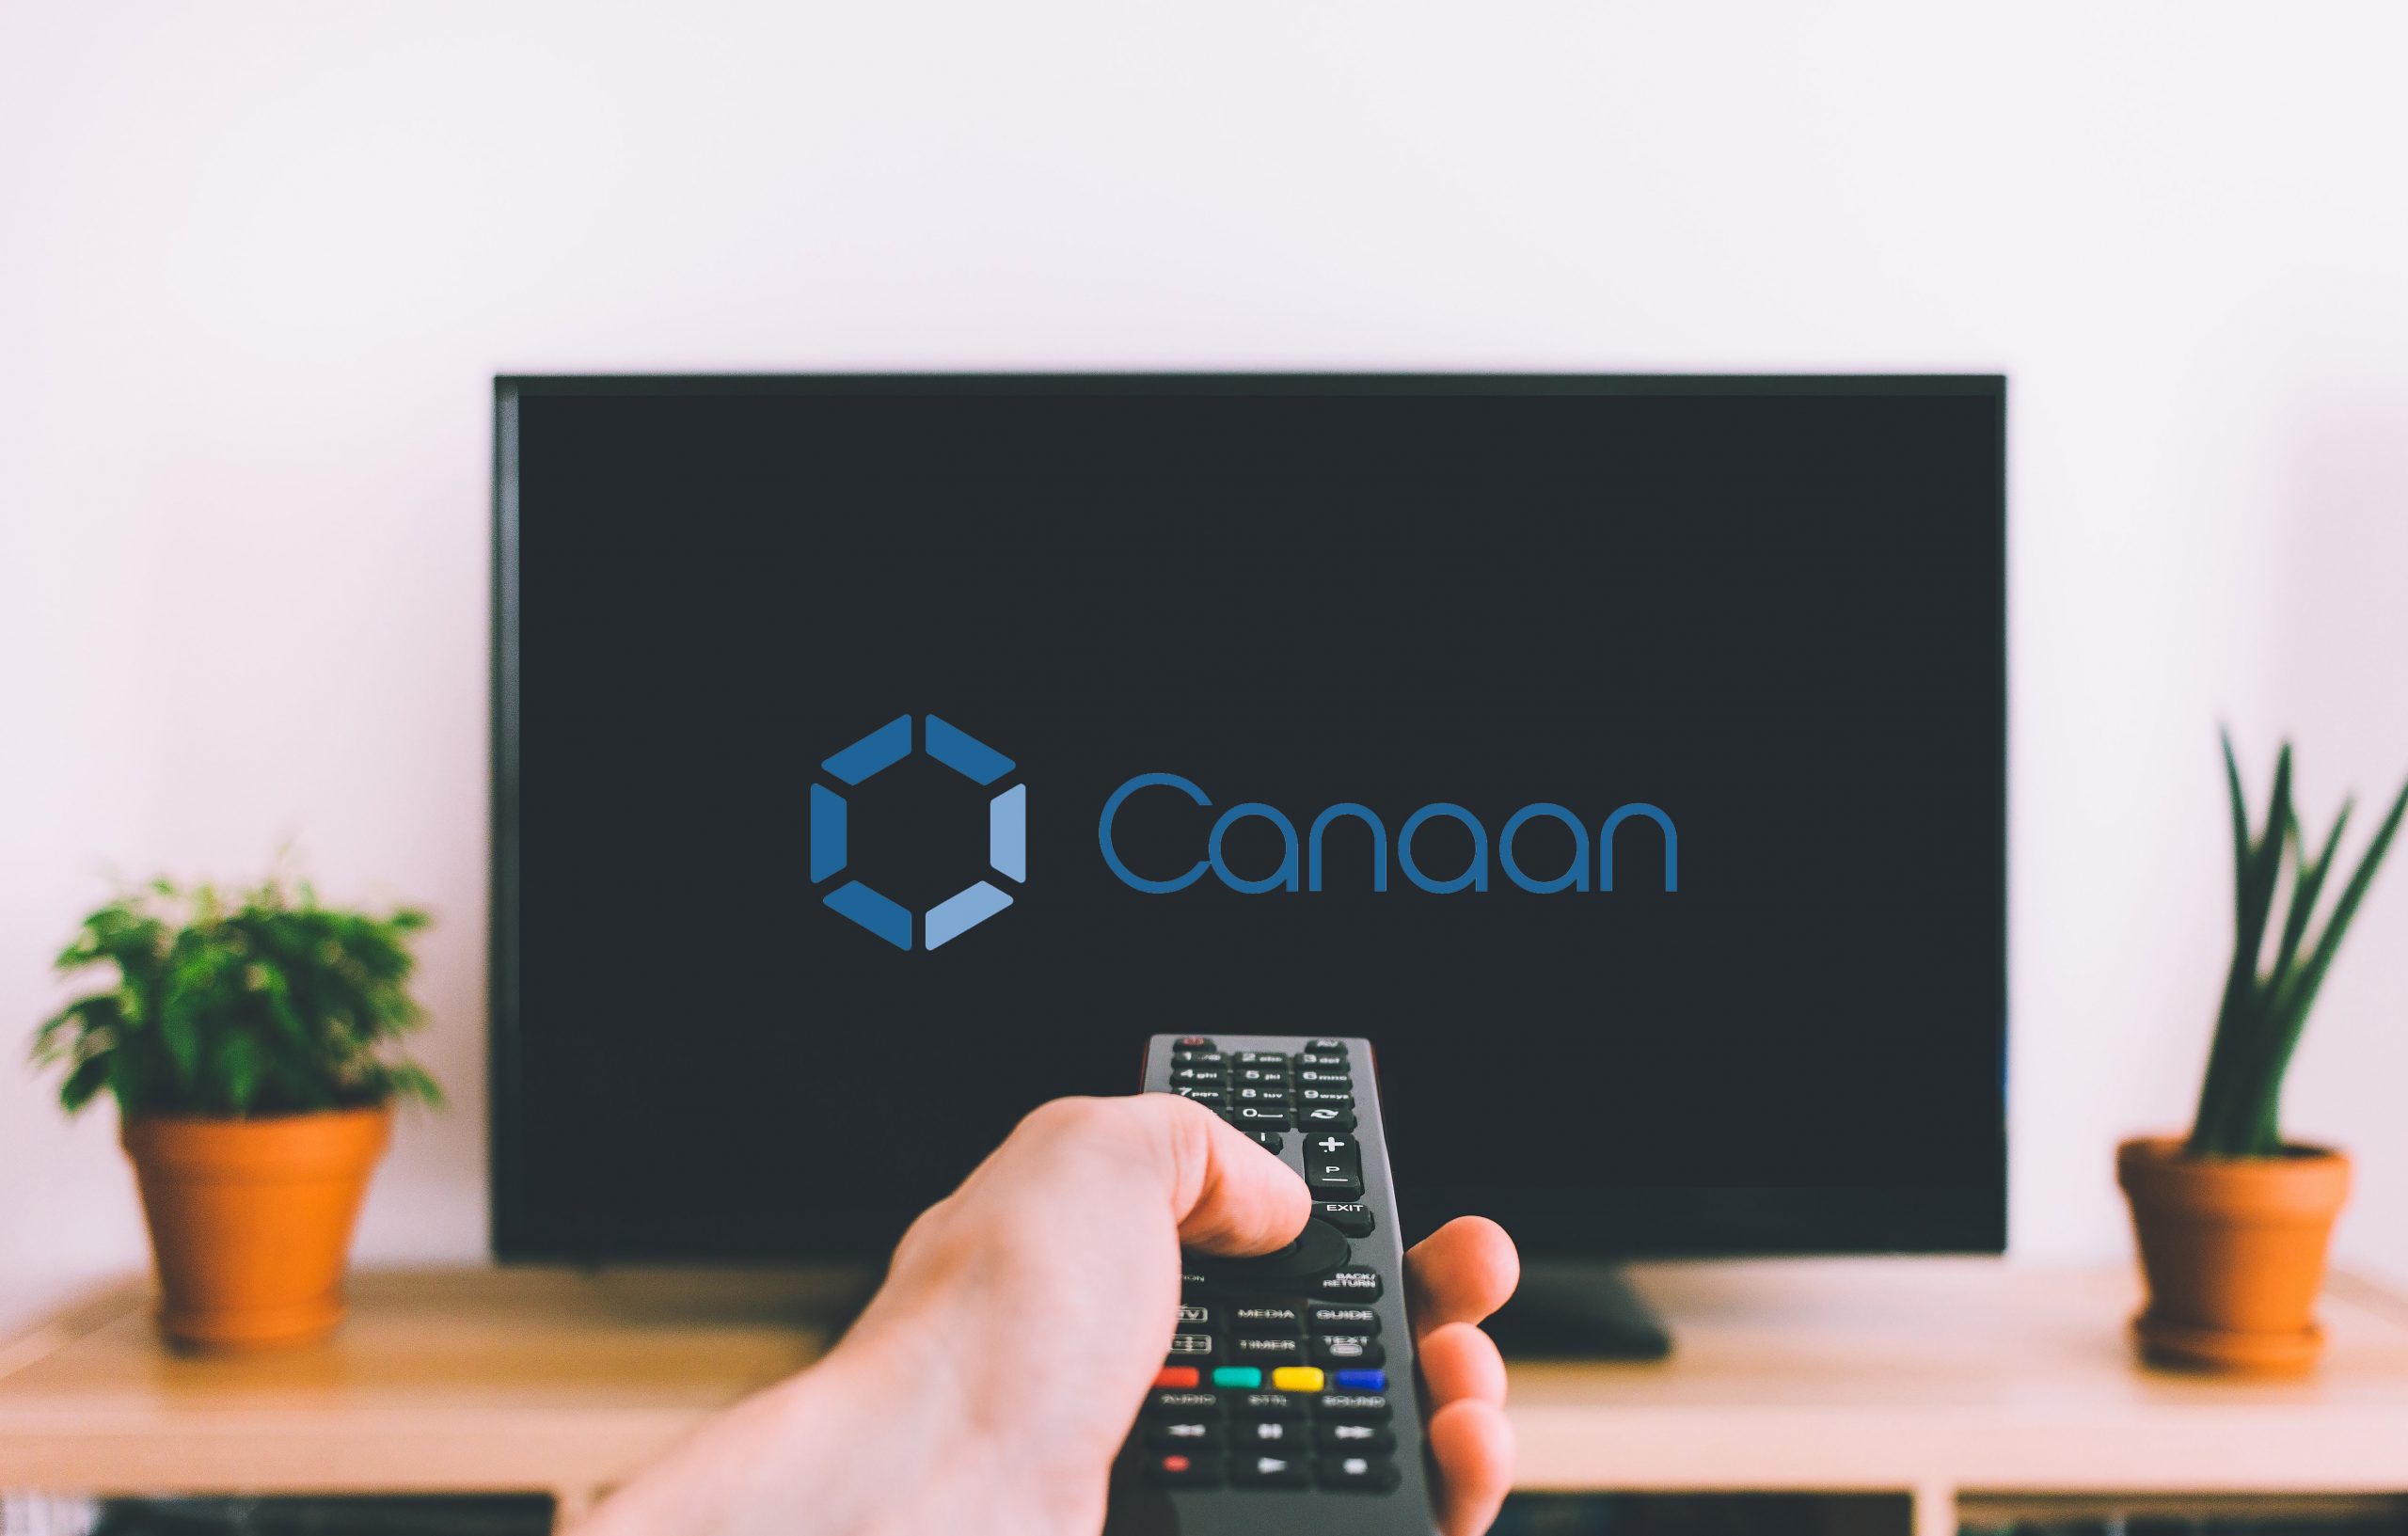 New Bitcoin Mining TV by Canaan Creative